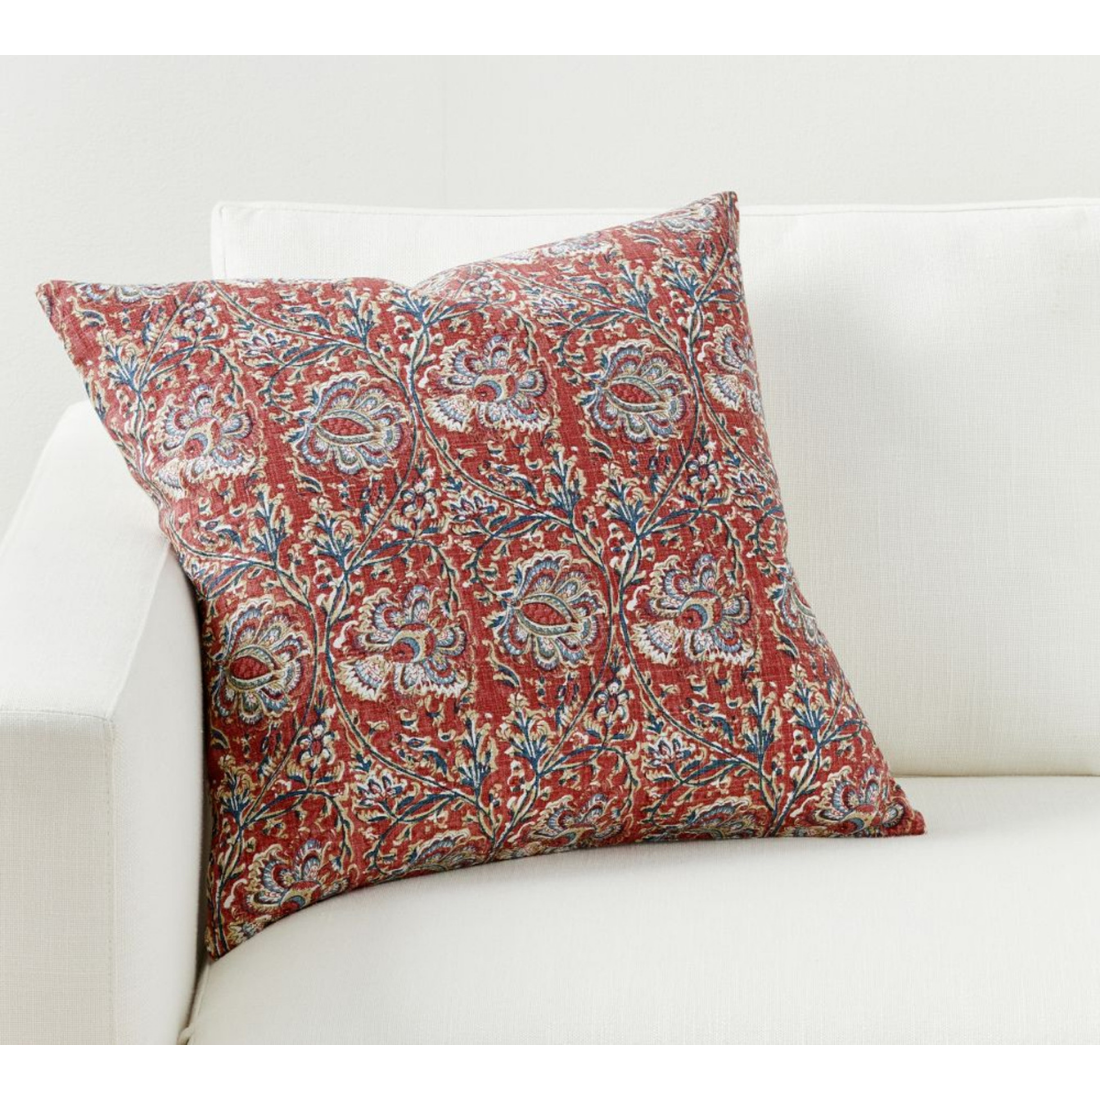 Faded Persian Inspired Print Cushion